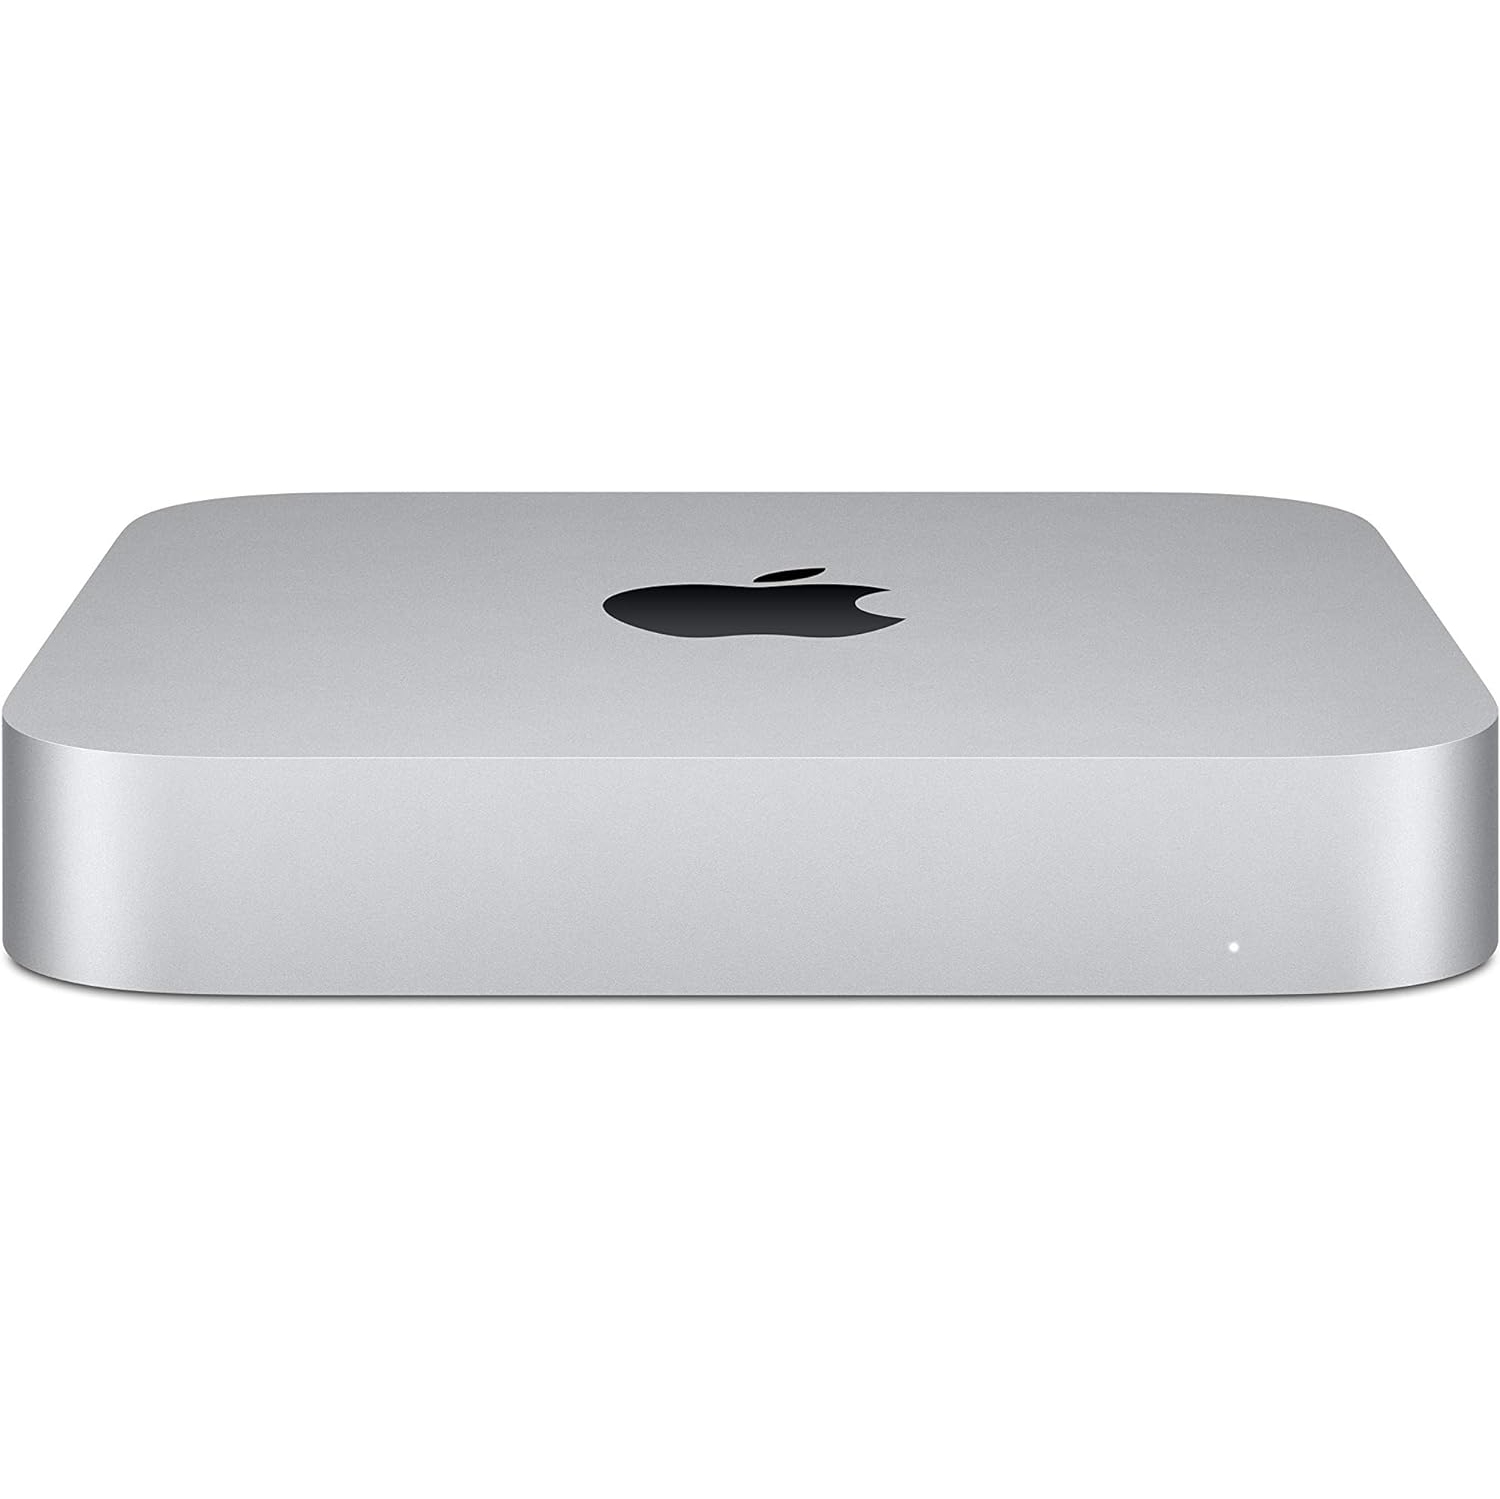 Refurbished (Excellent) - Apple 2020 Mac Mini with Apple M1 Chip (8GB RAM, 512GB SSD Storage)